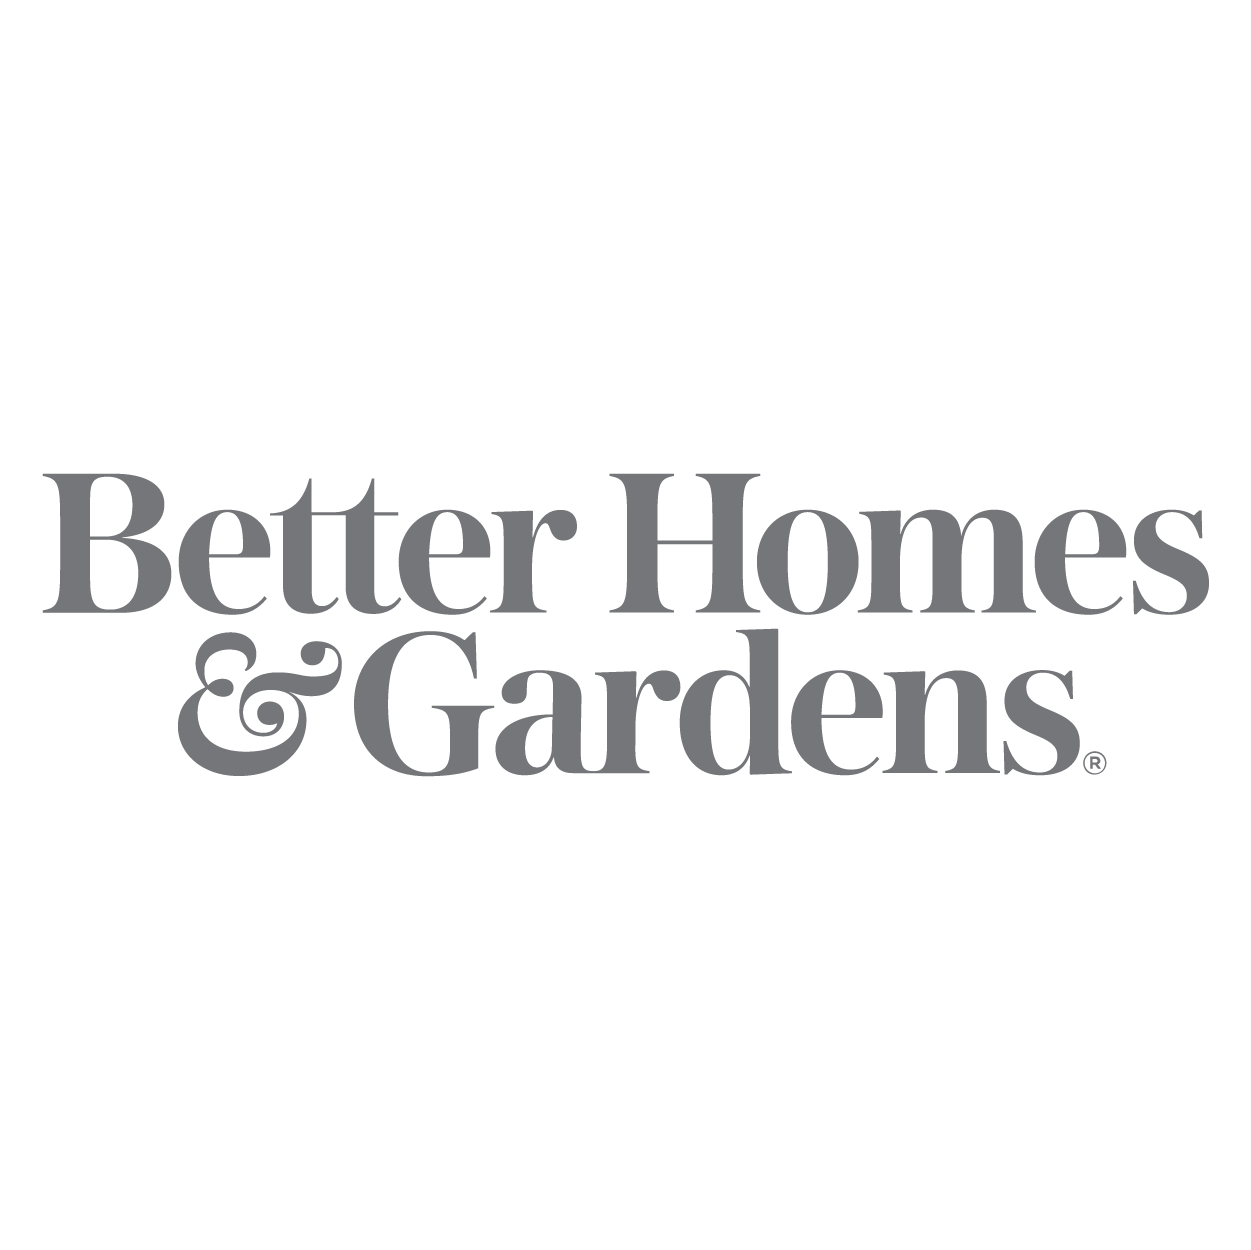 Better Homes & Gardens logo in grey